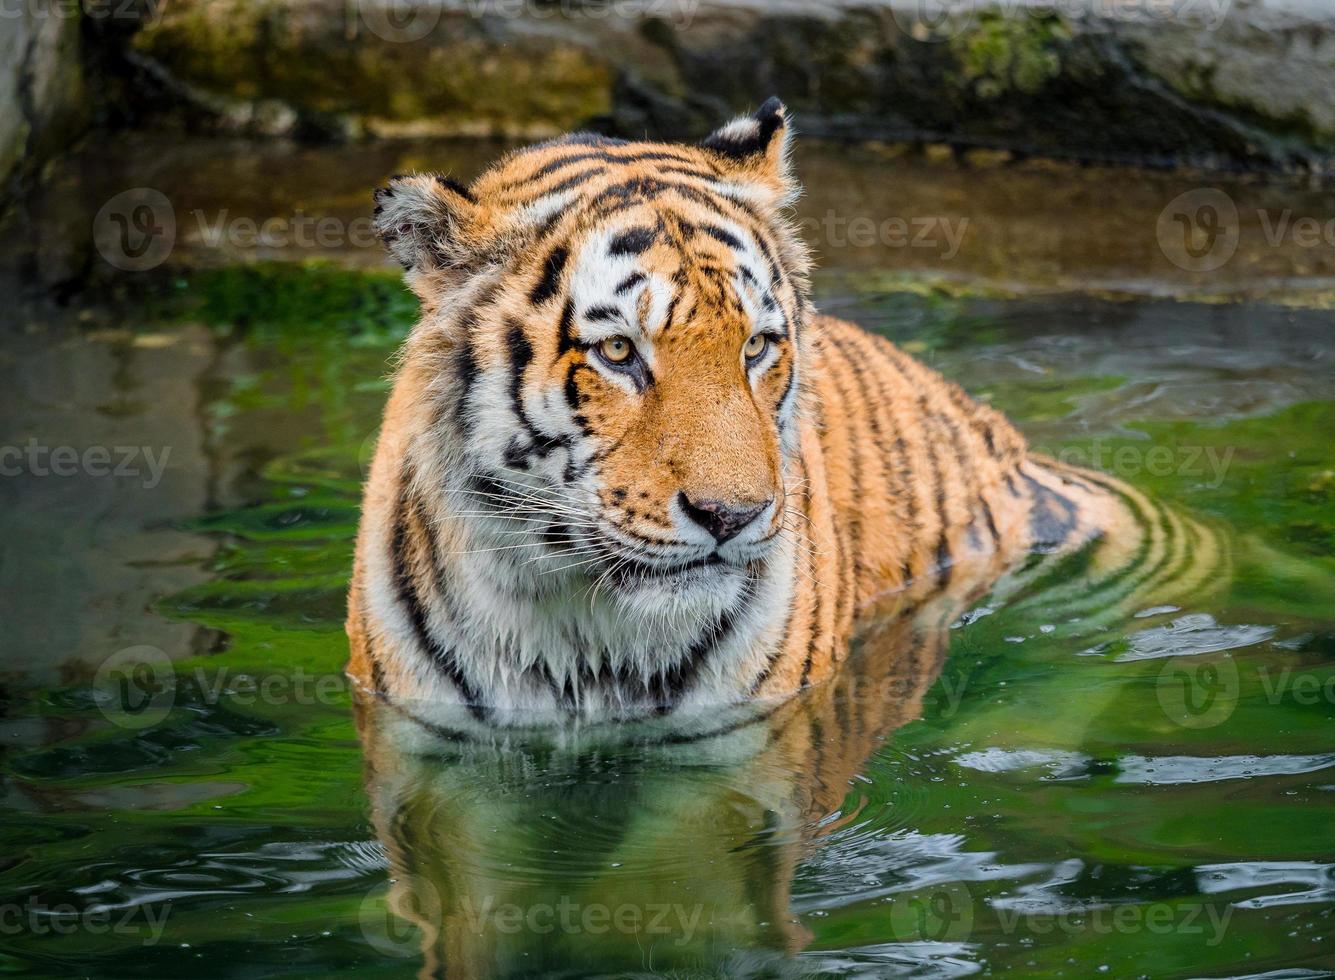 panthera tigris altaica Siberische tijger in water, close-up foto